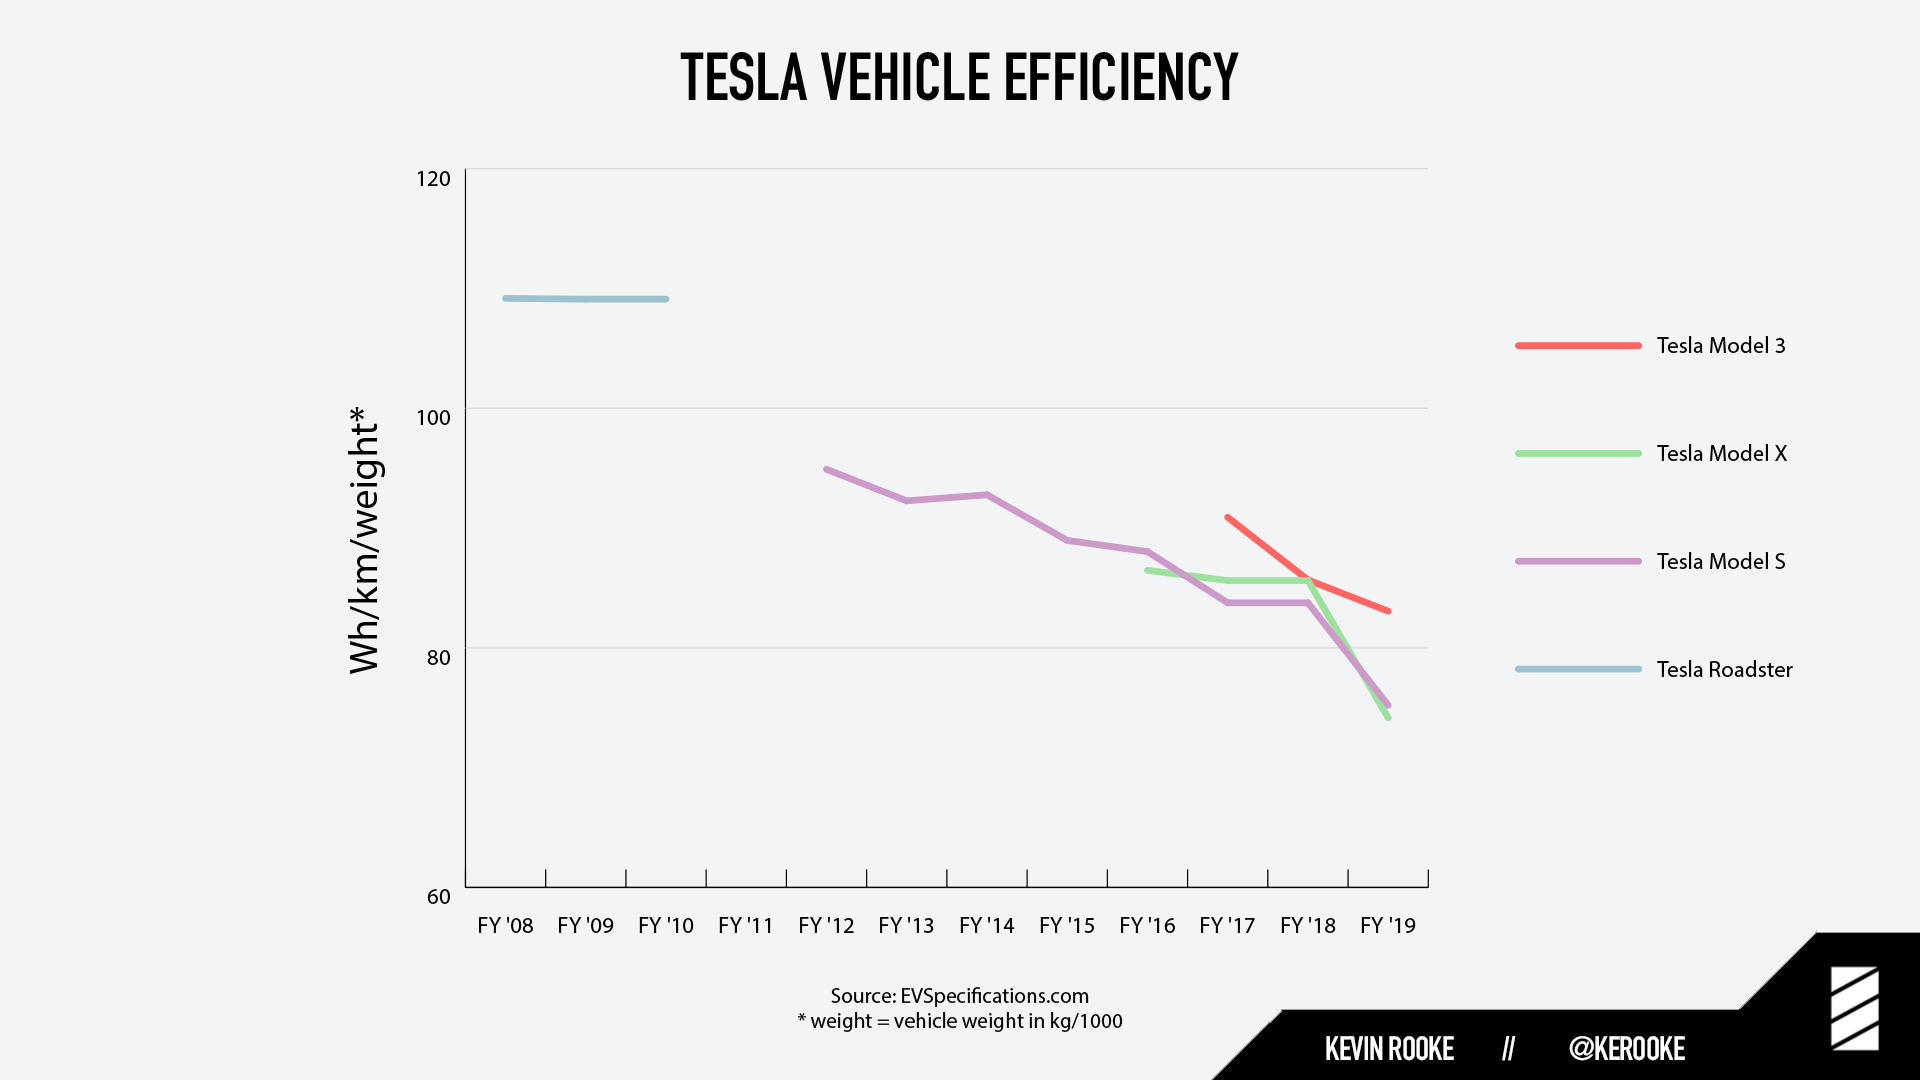 Tesla's efficiency is improving 3 a year increasing already